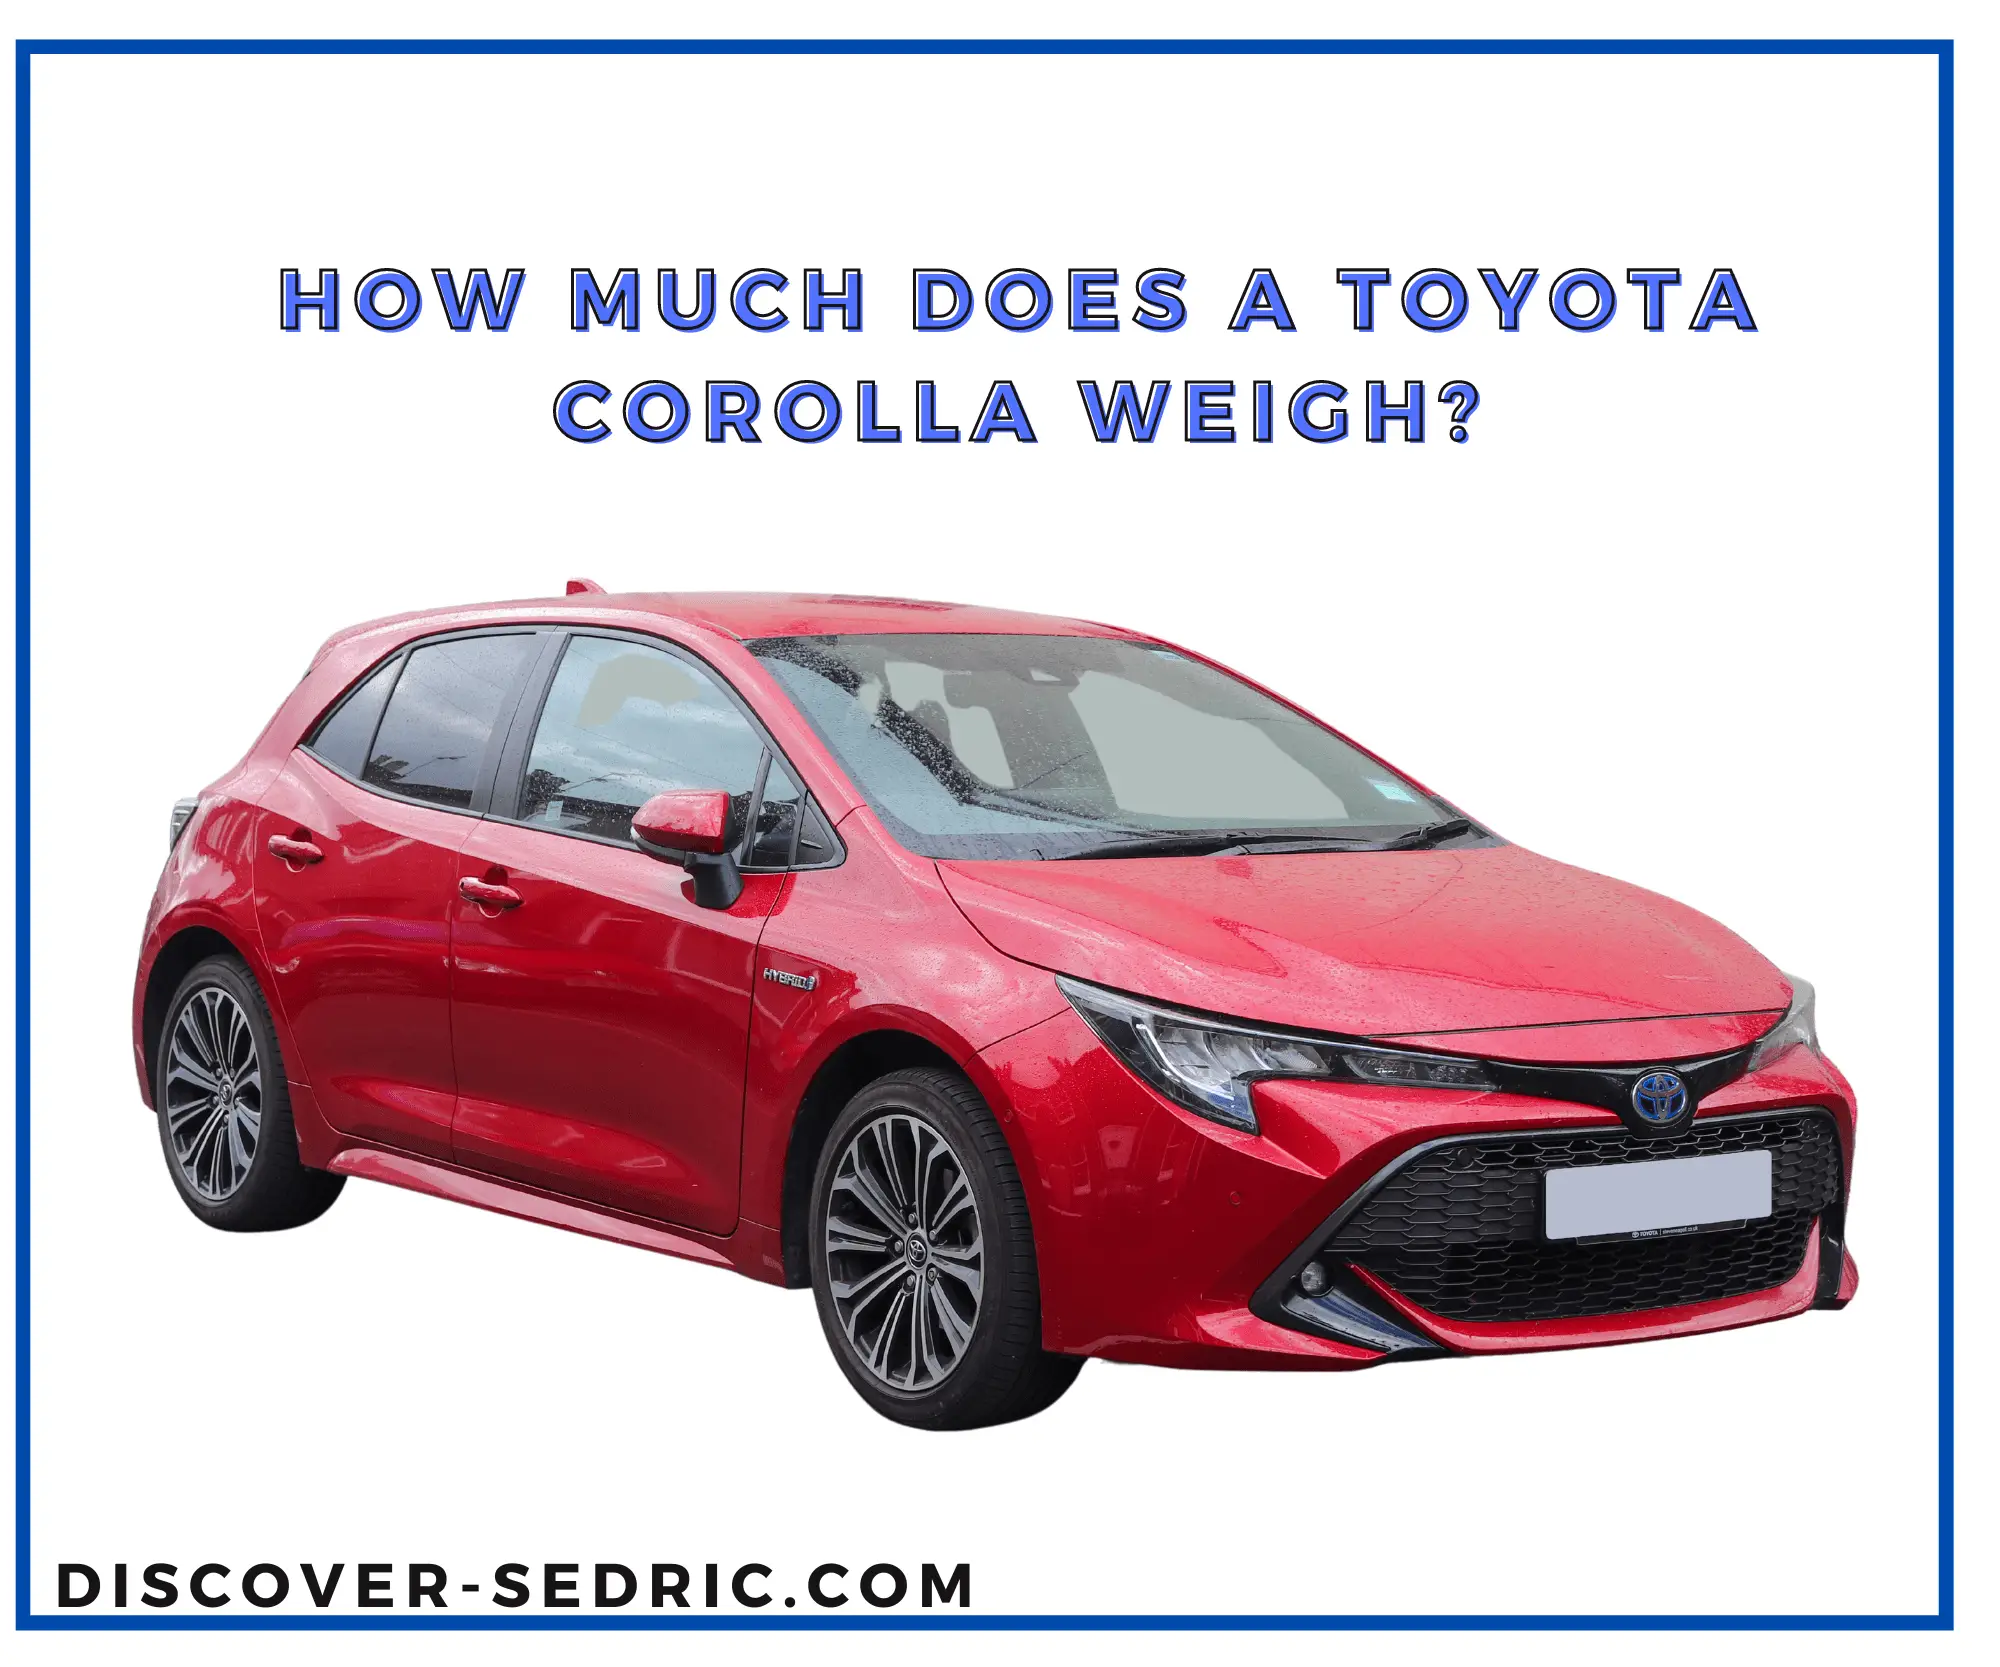 Toyota corolla weigh